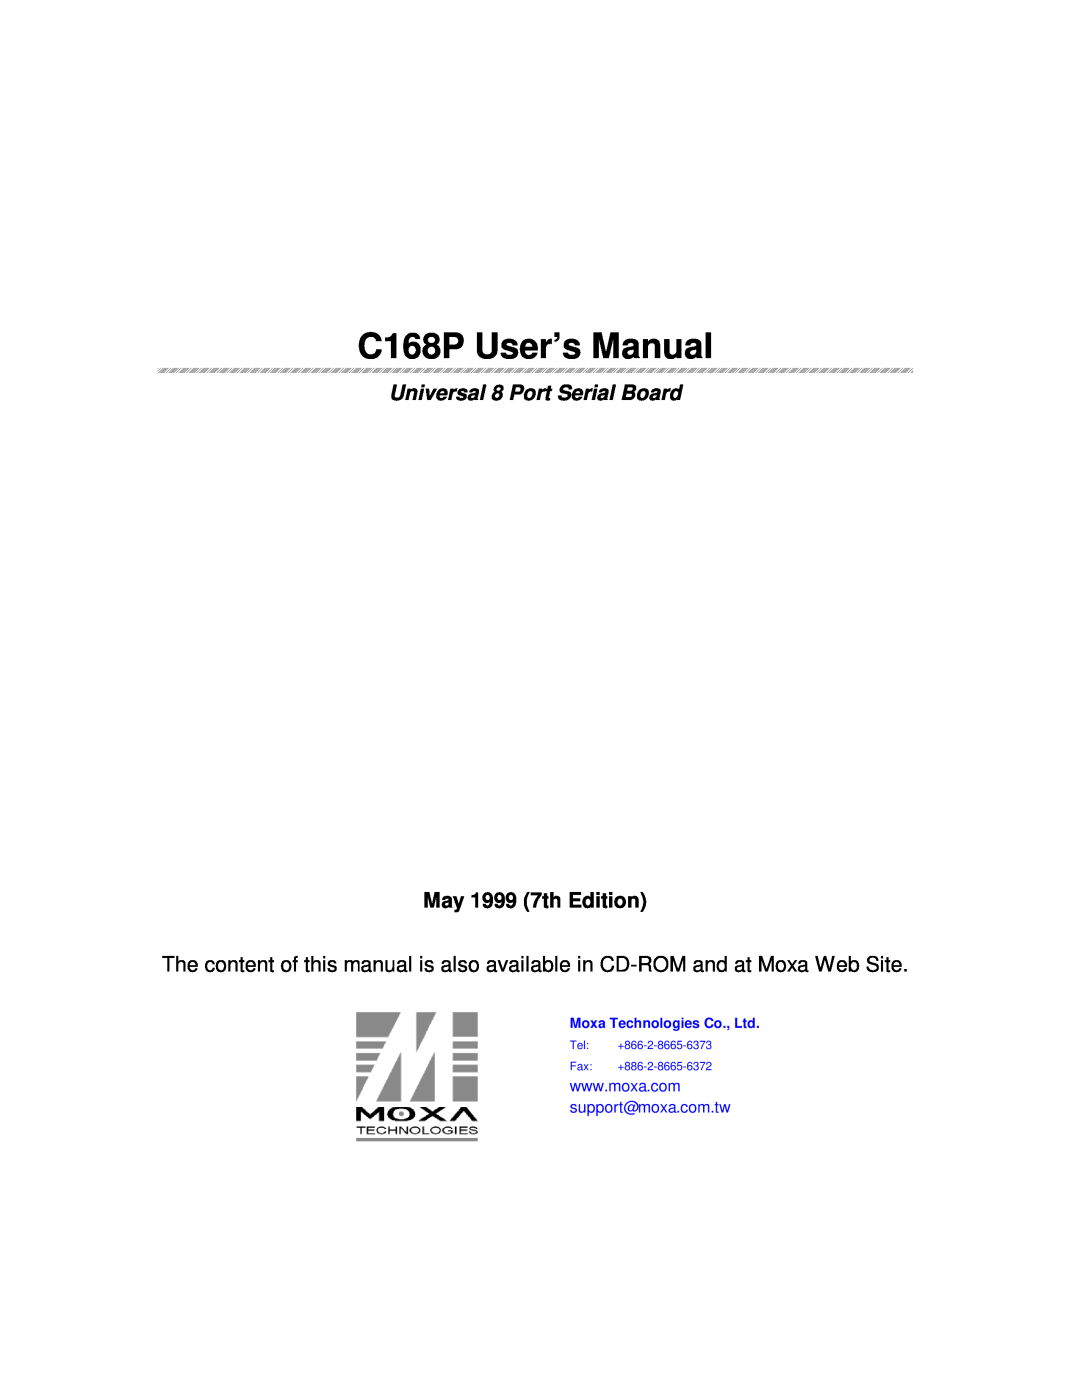 Moxa Technologies user manual C168P User’s Manual, May 1999 7th Edition, Universal 8 Port Serial Board 